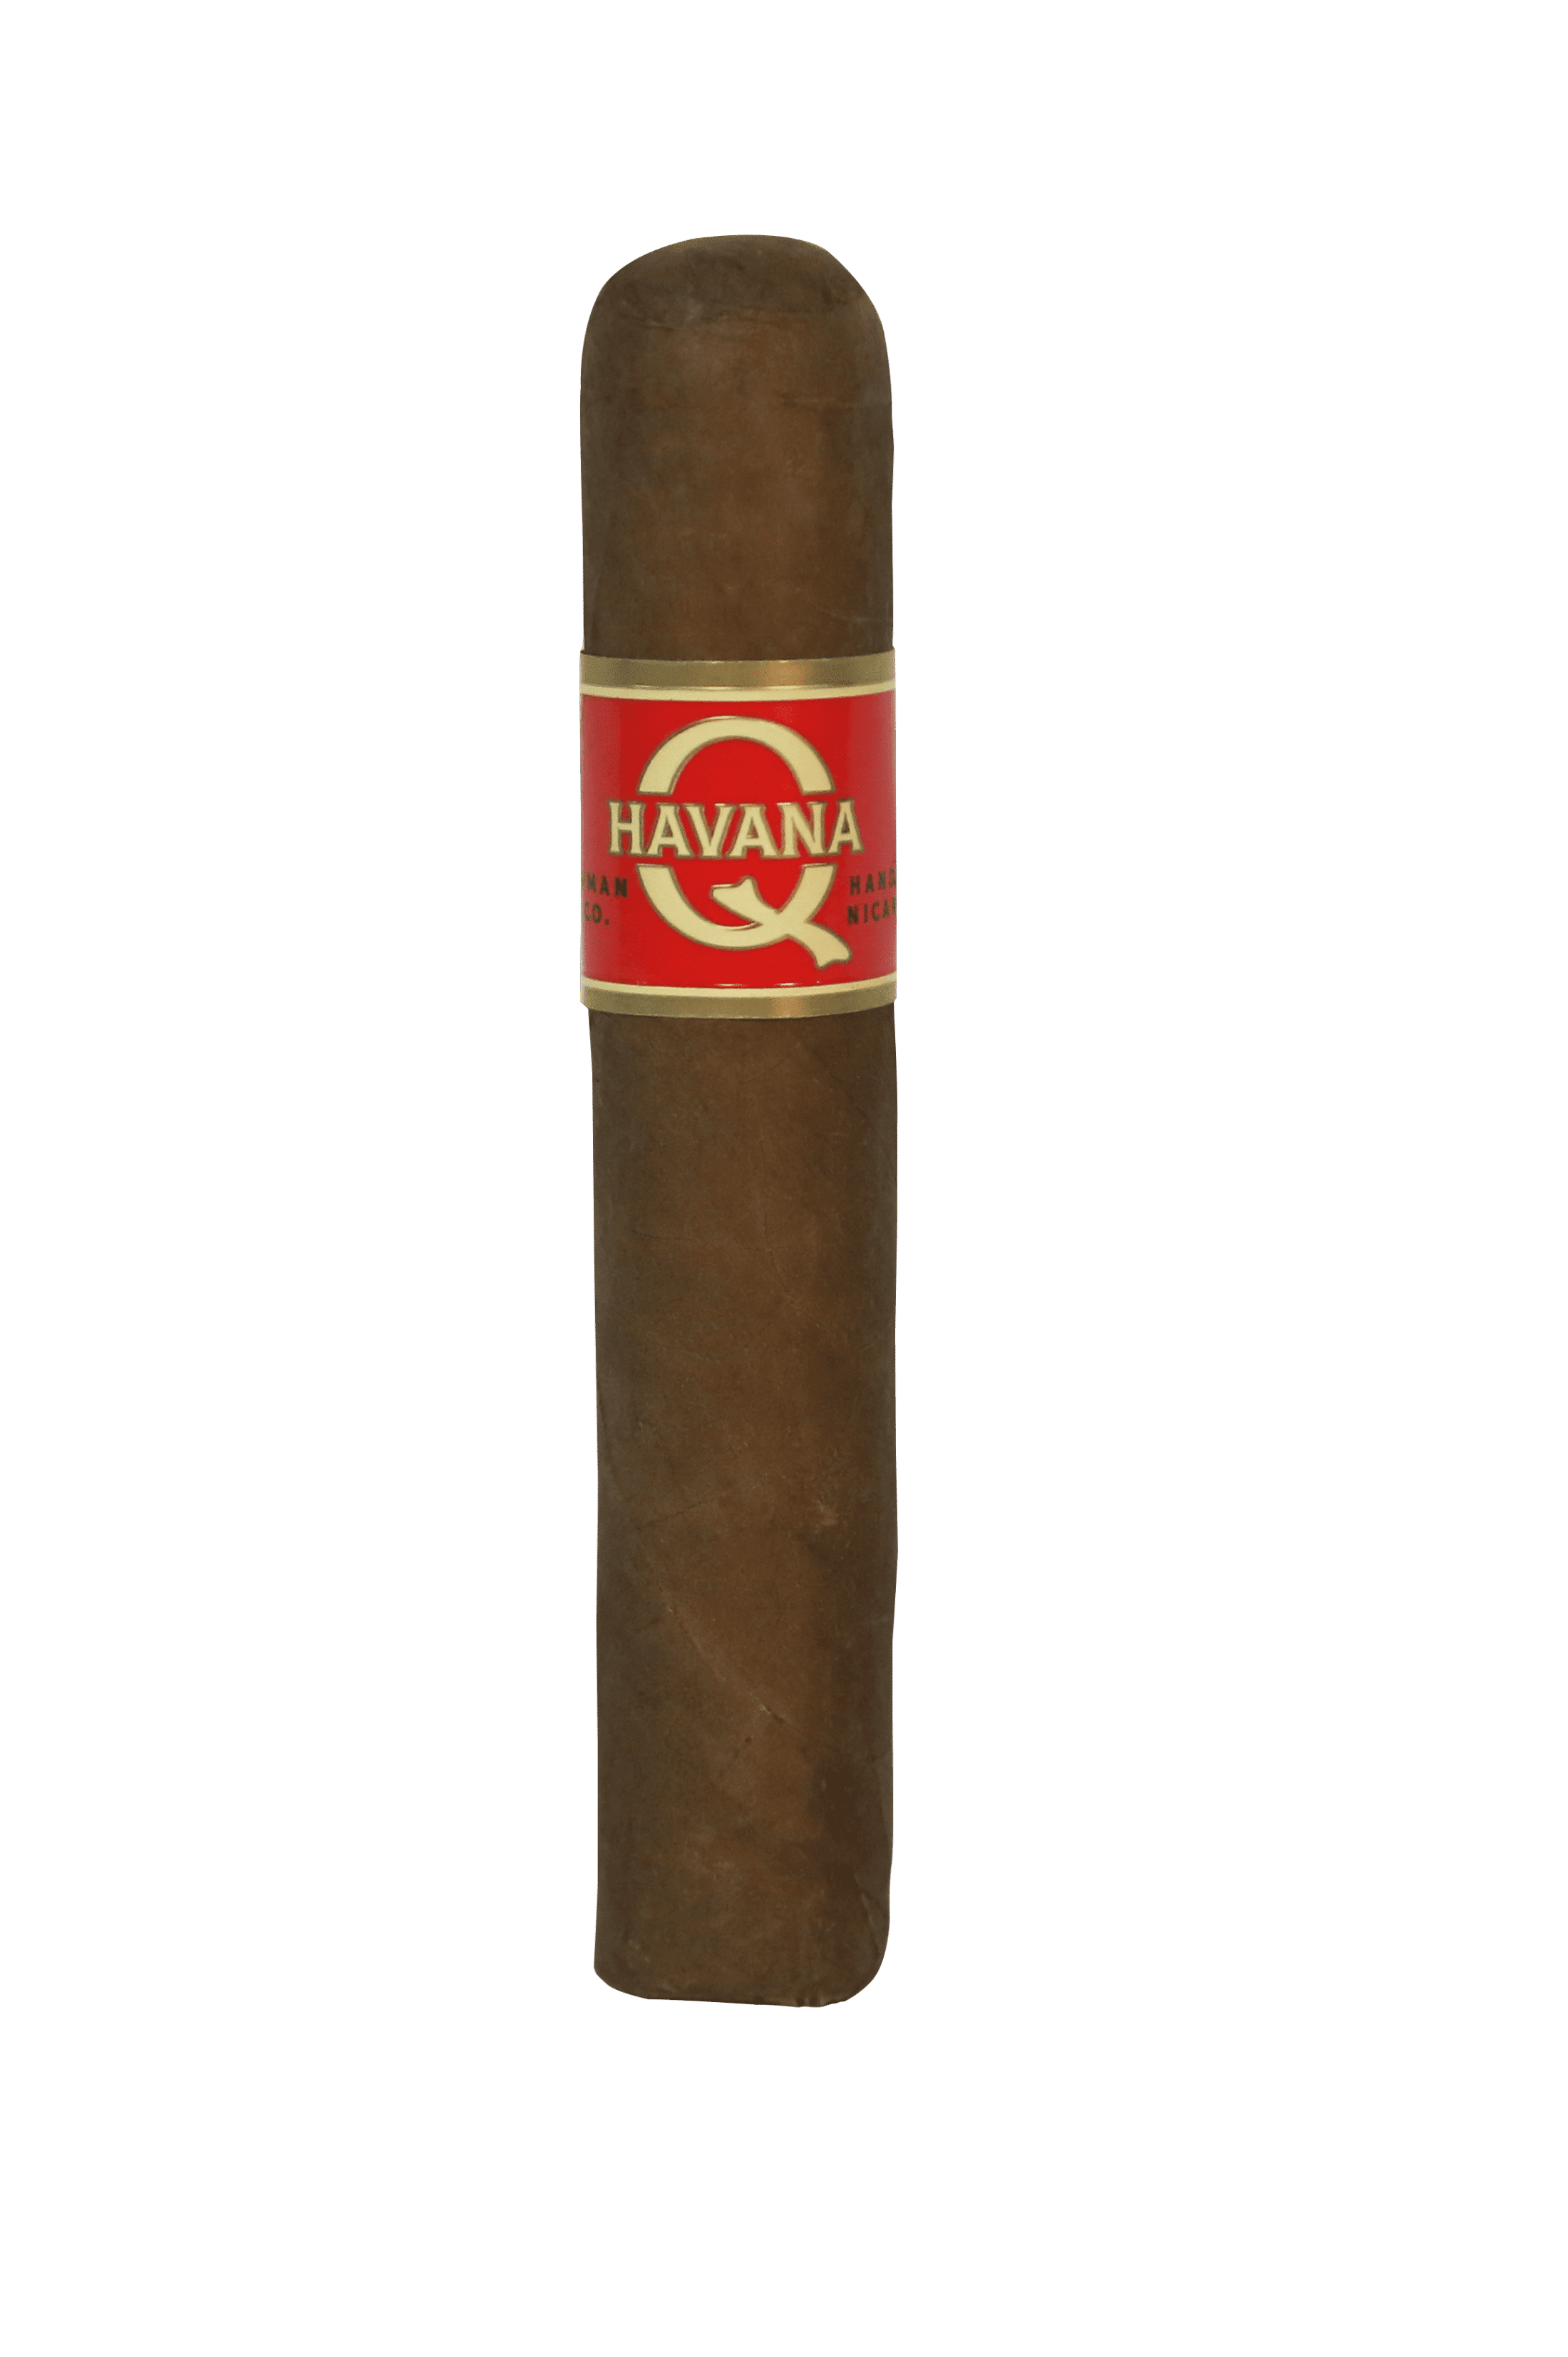 Single Havana Q Double Robusto cigar